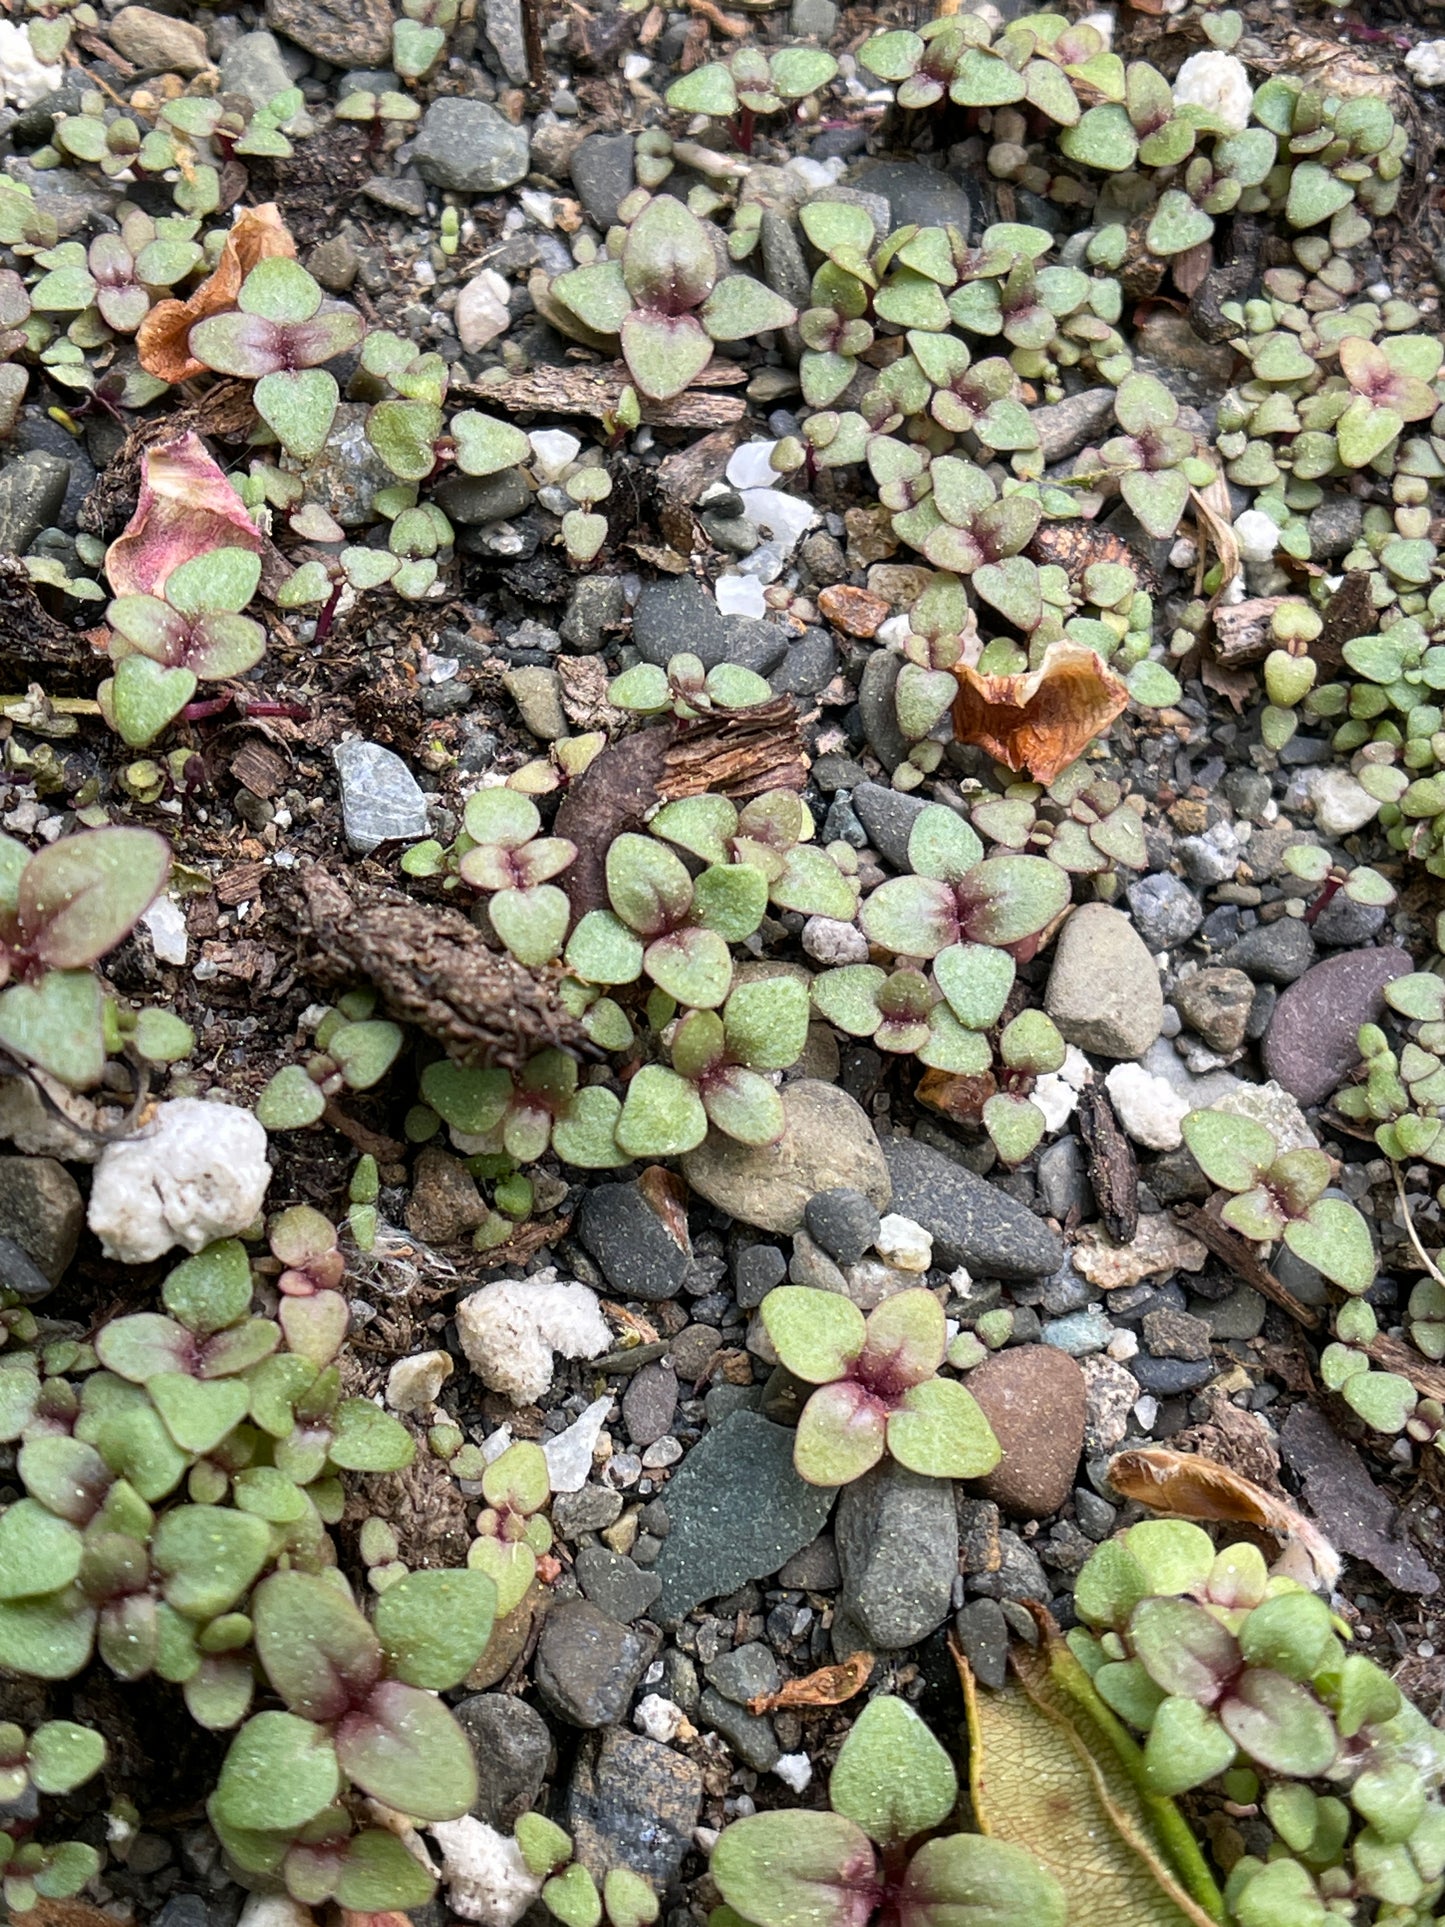 Beardtongues — Northeastern beardtongue (Penstemon hirsutus) Seeds